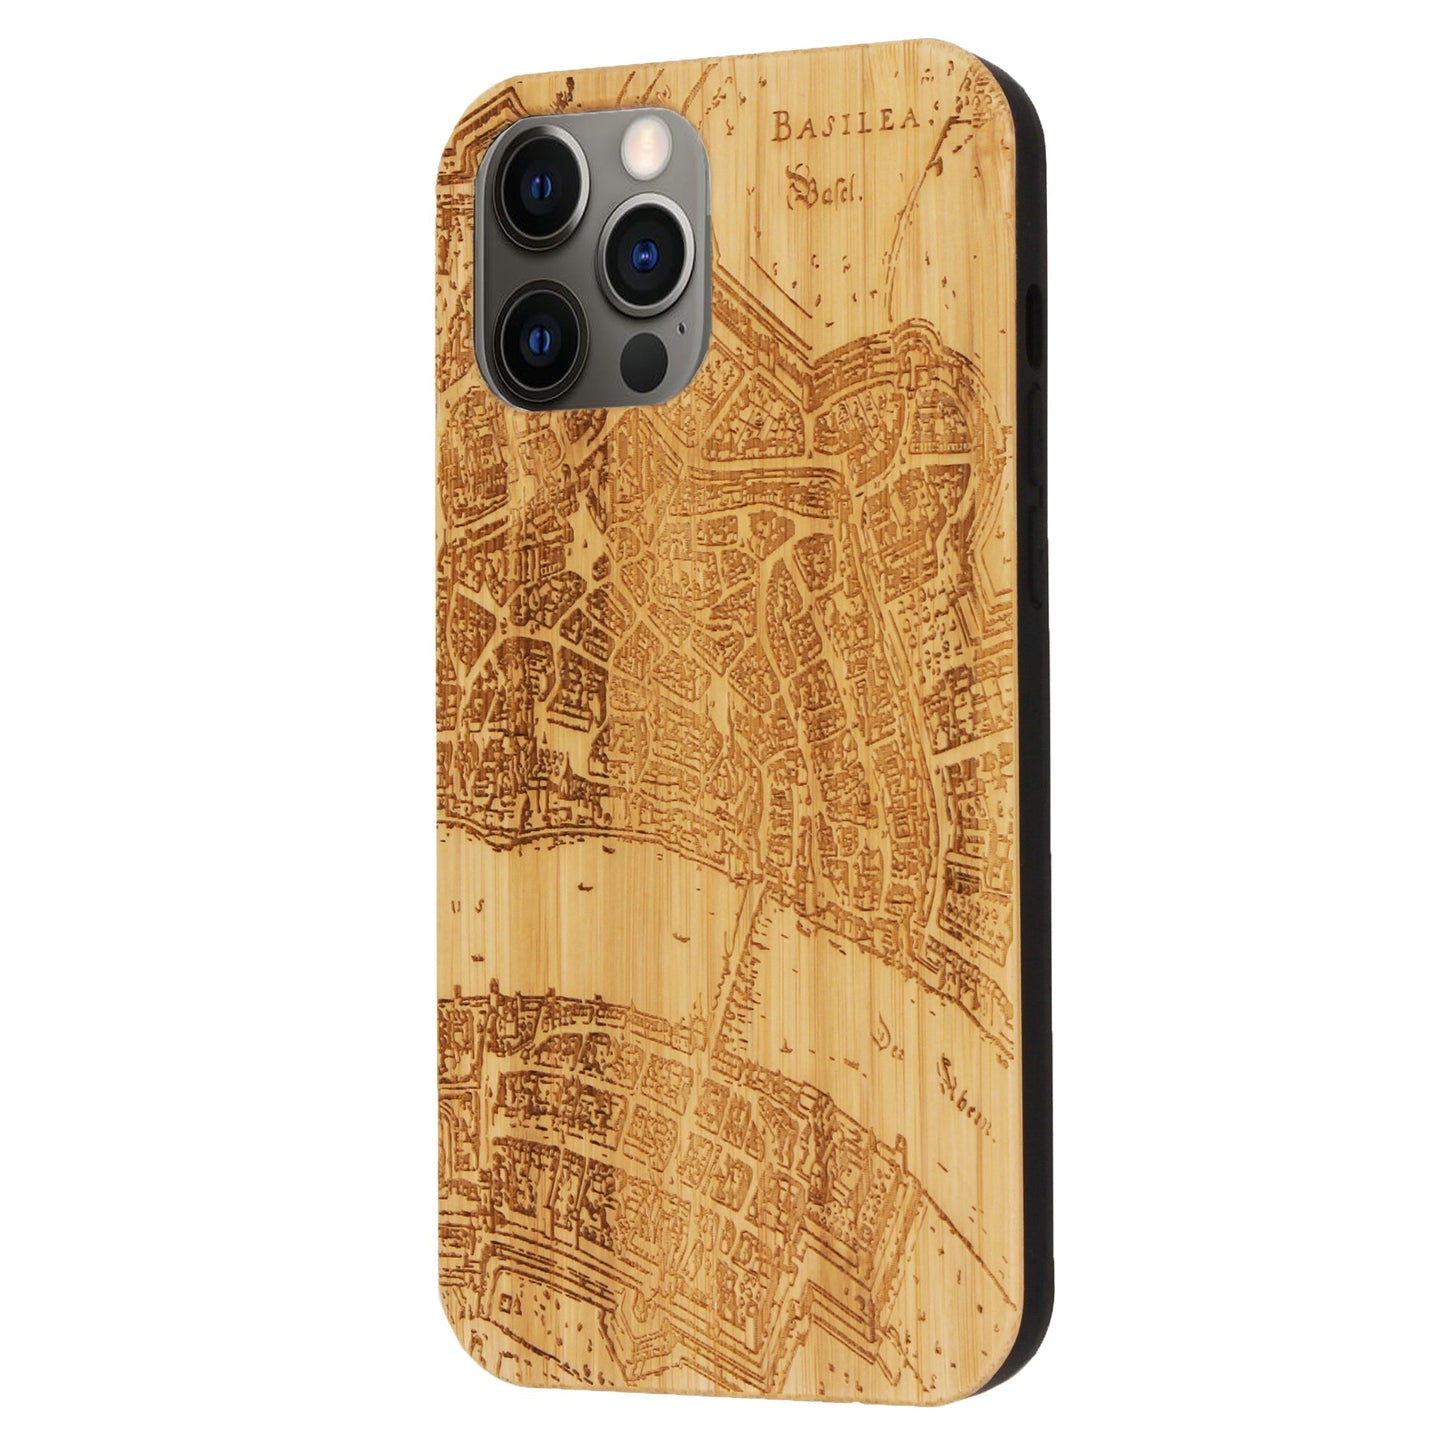 Basel Merian Eden Bamboo Case for iPhone 12 Pro Max 